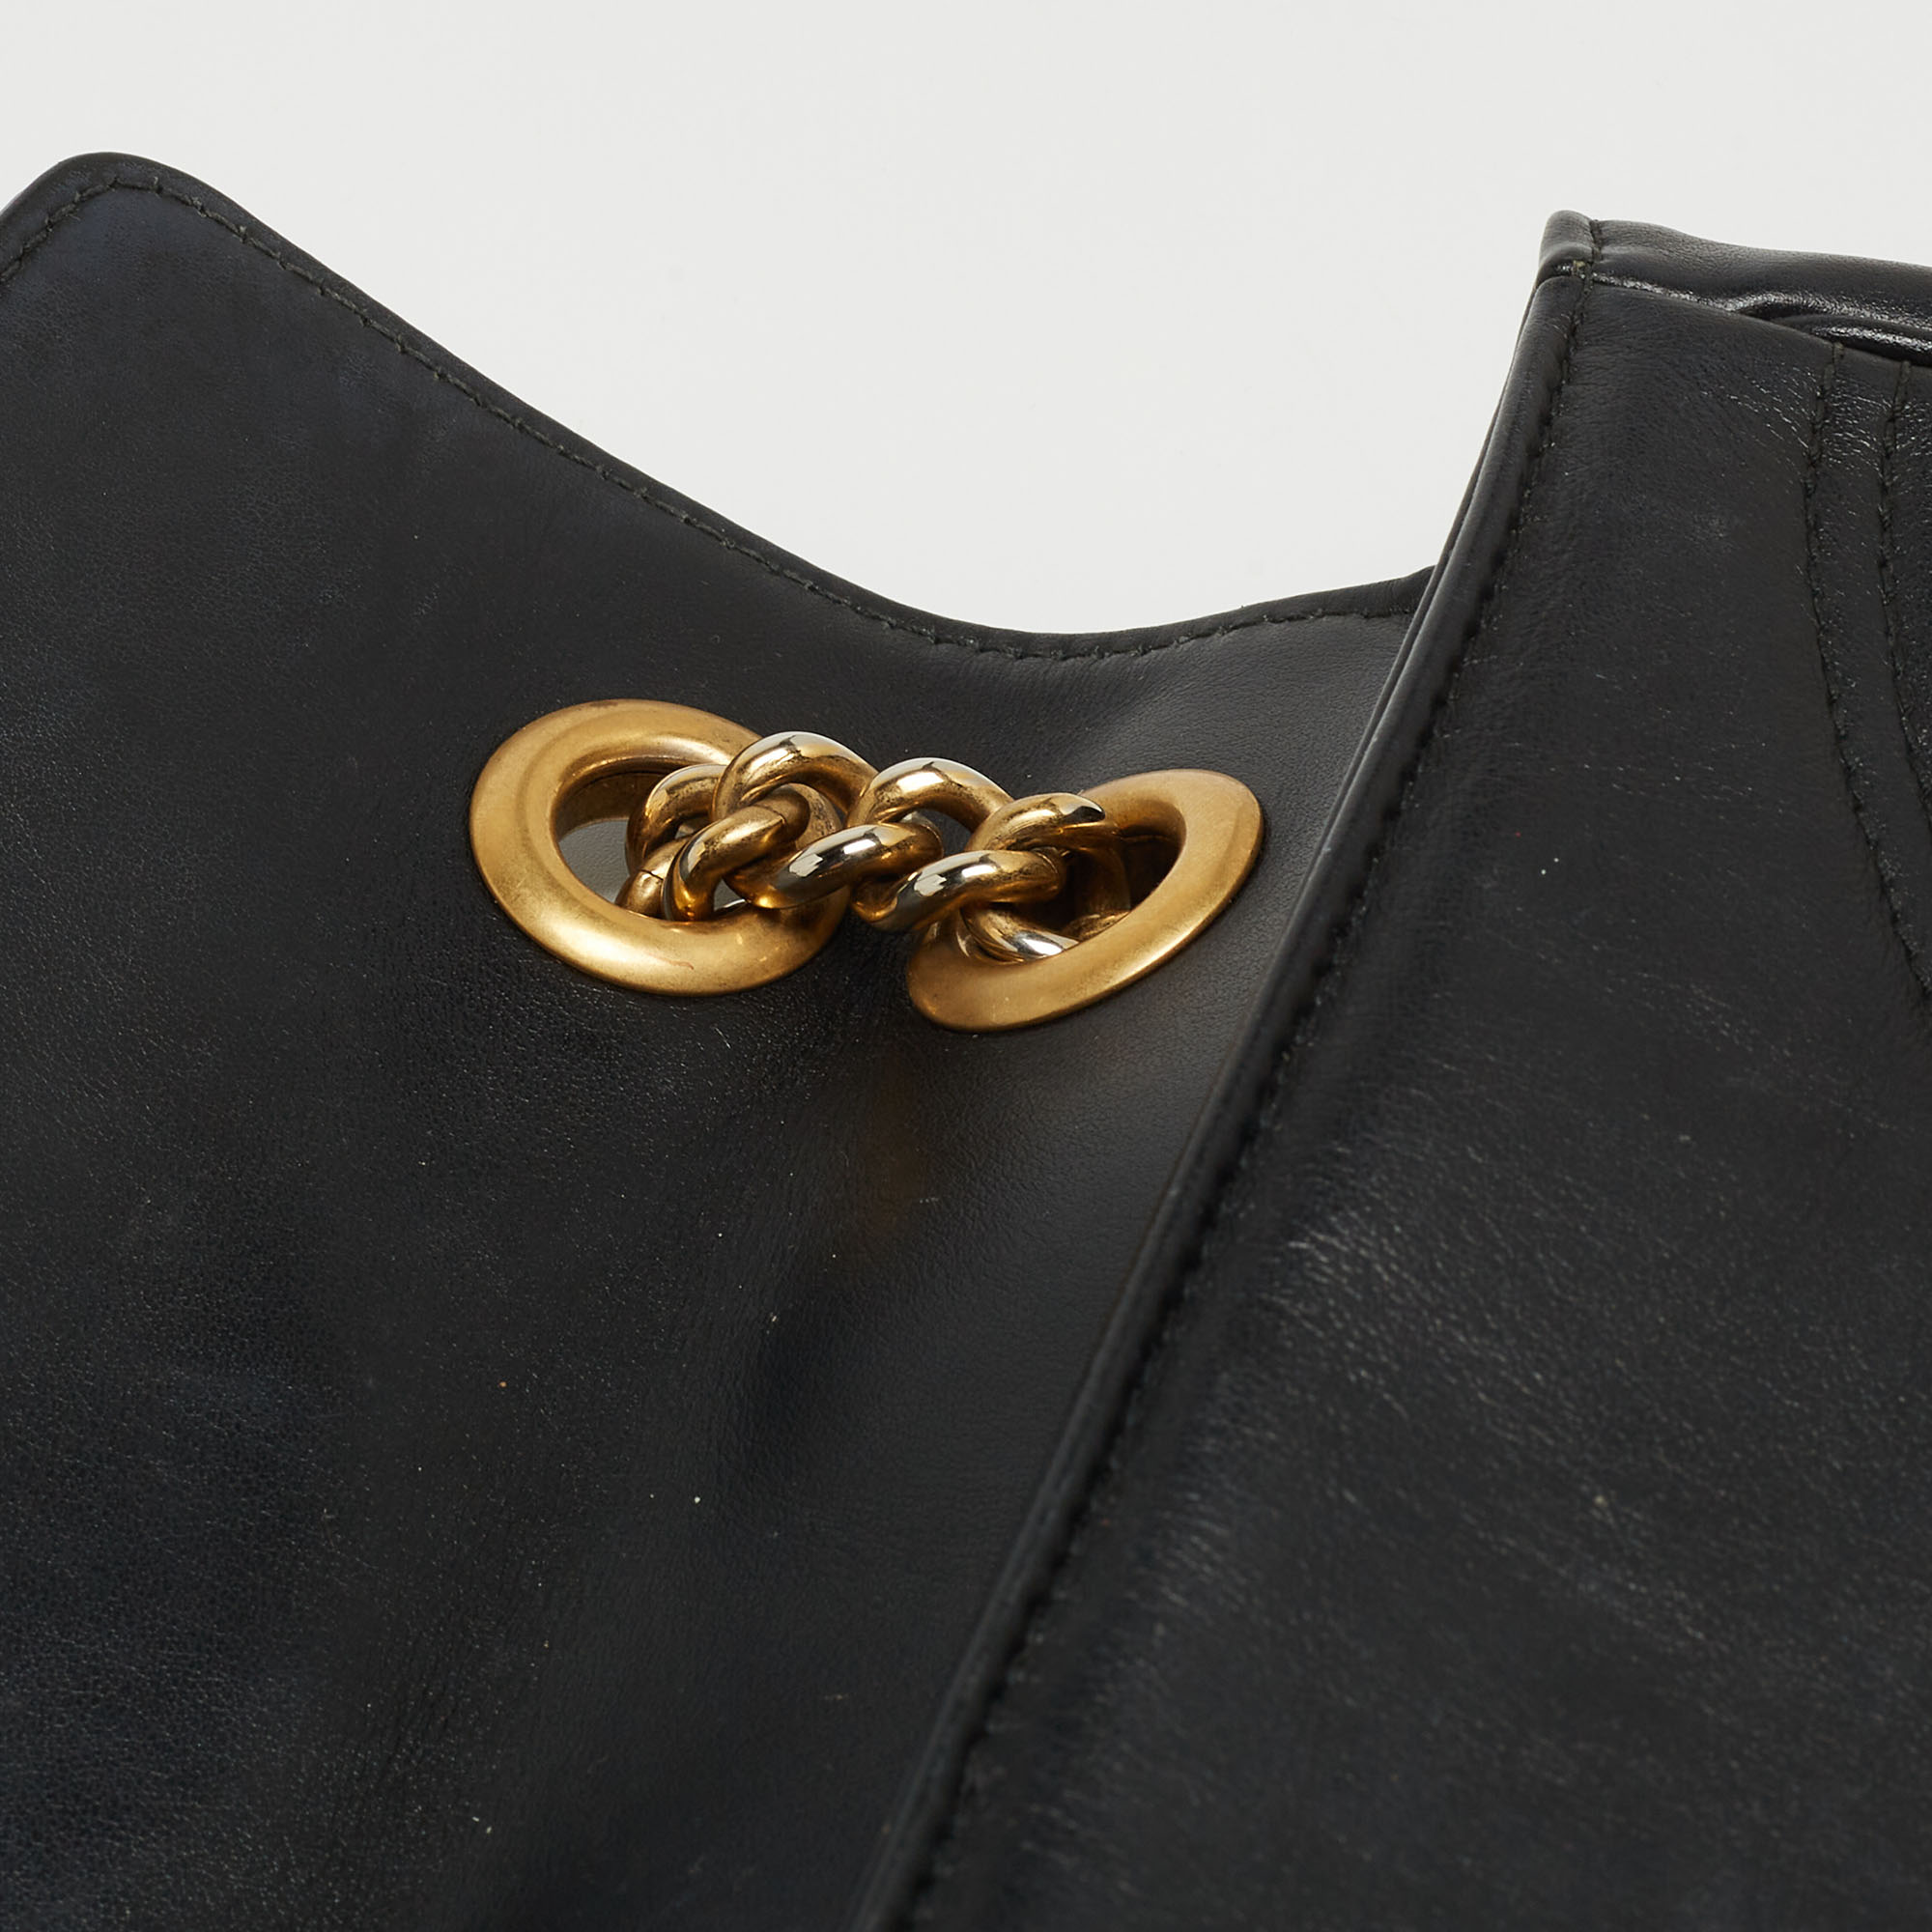 Gucci Black Matelasse Leather Mini GG Marmont Crossbody Bag